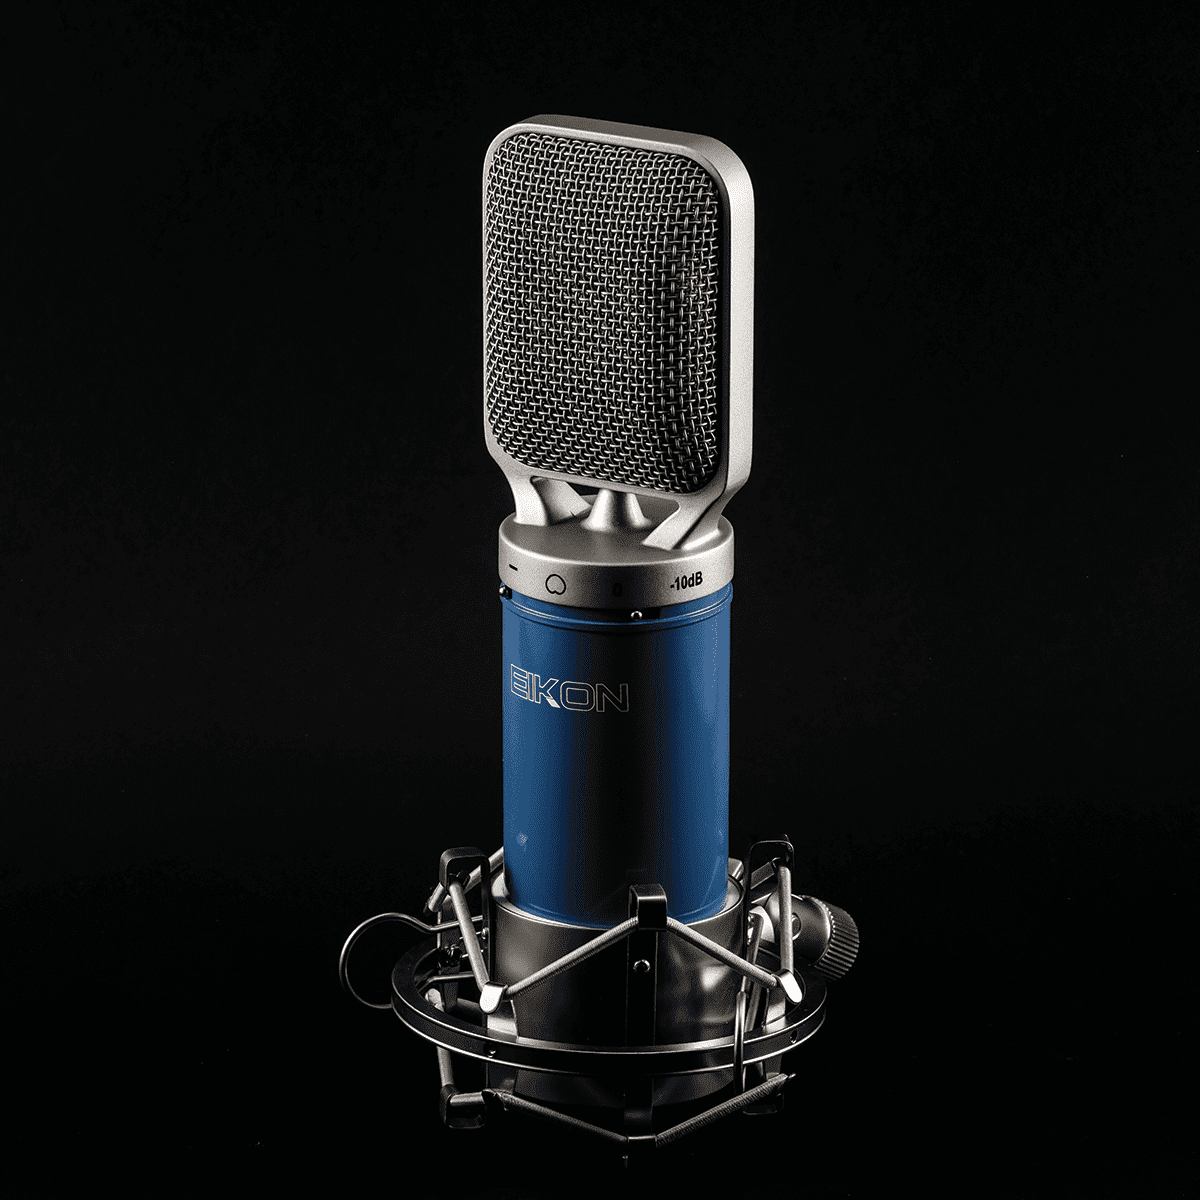 Eikon C14 Studio Condenser Microphone with mount & case